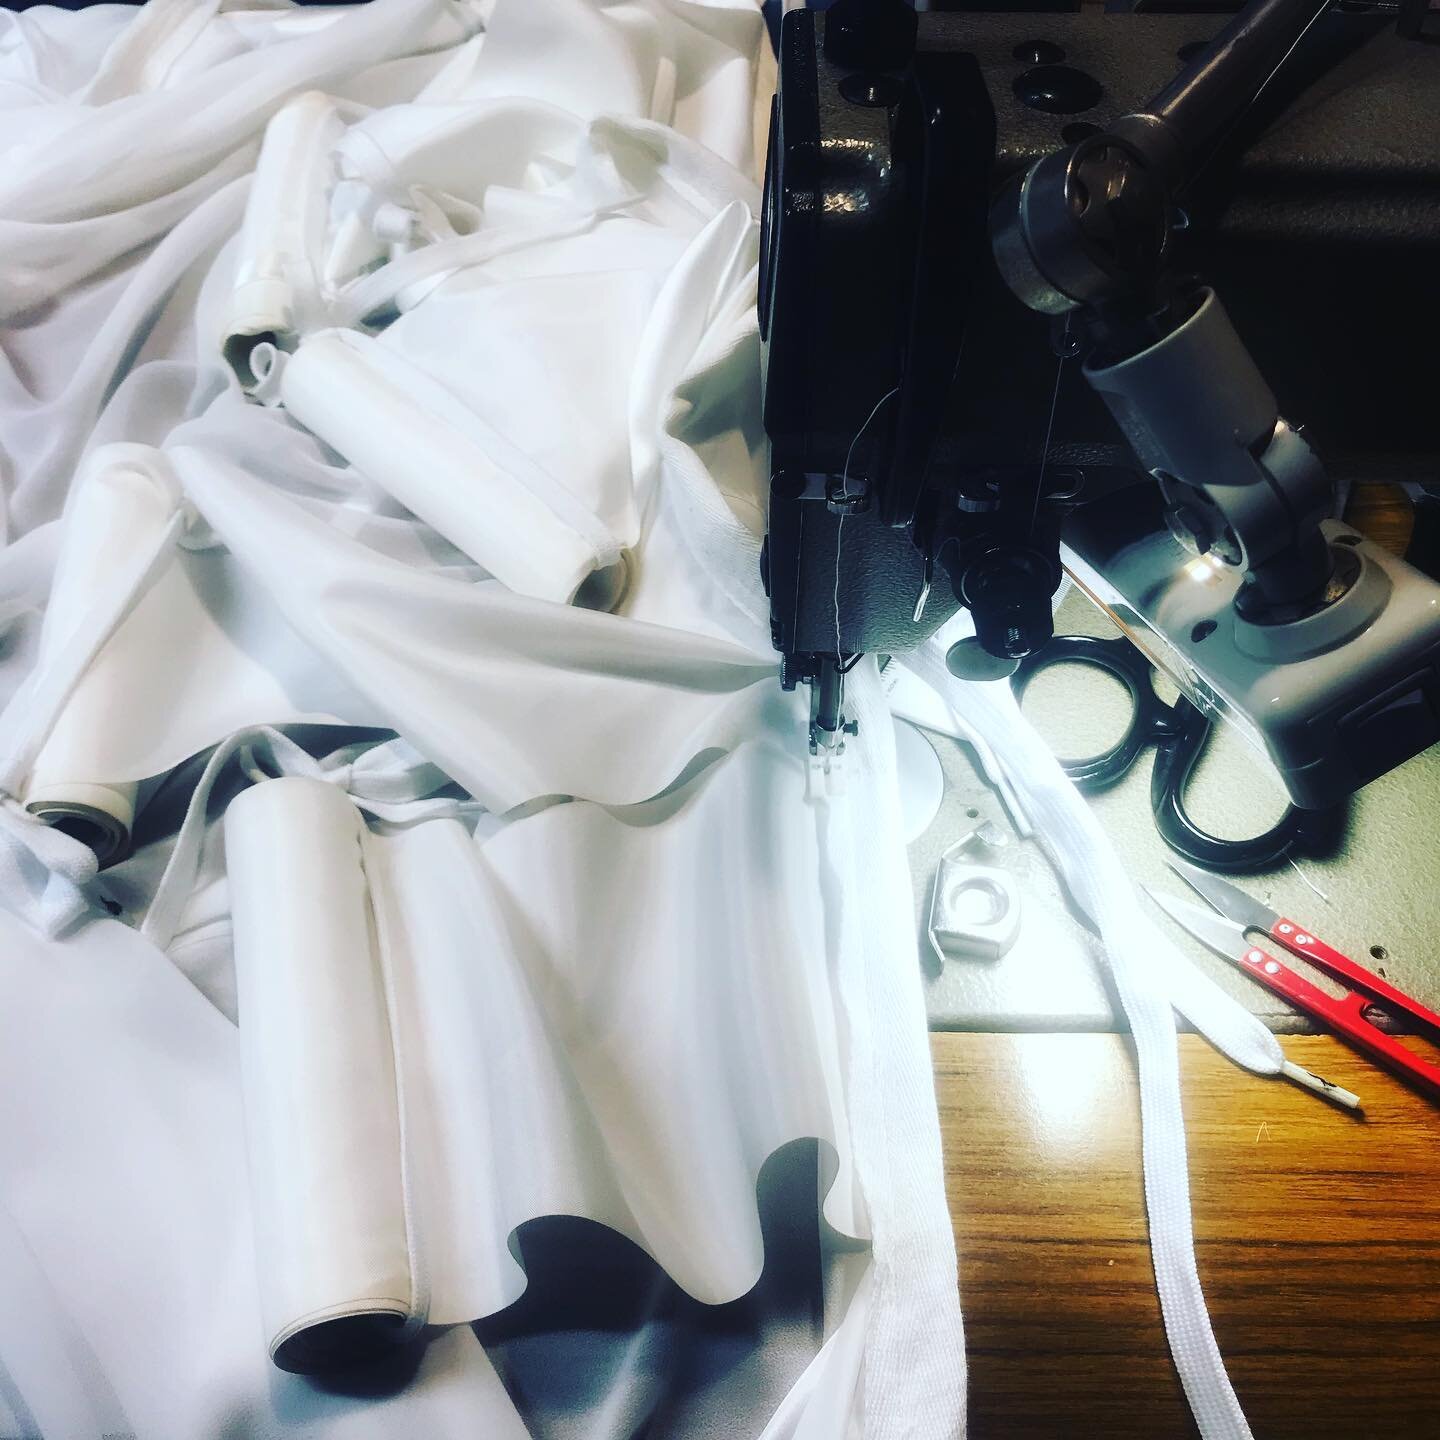 Custom white ribbon drape in the making ✂️🧷 #sydneyevents 
#drapehire #drapes #pipeanddrape 
#sydneyeventhire 
#sydneycorporate 
#eventdecor #eventproduction #events #behindthescenes #sydneybusiness